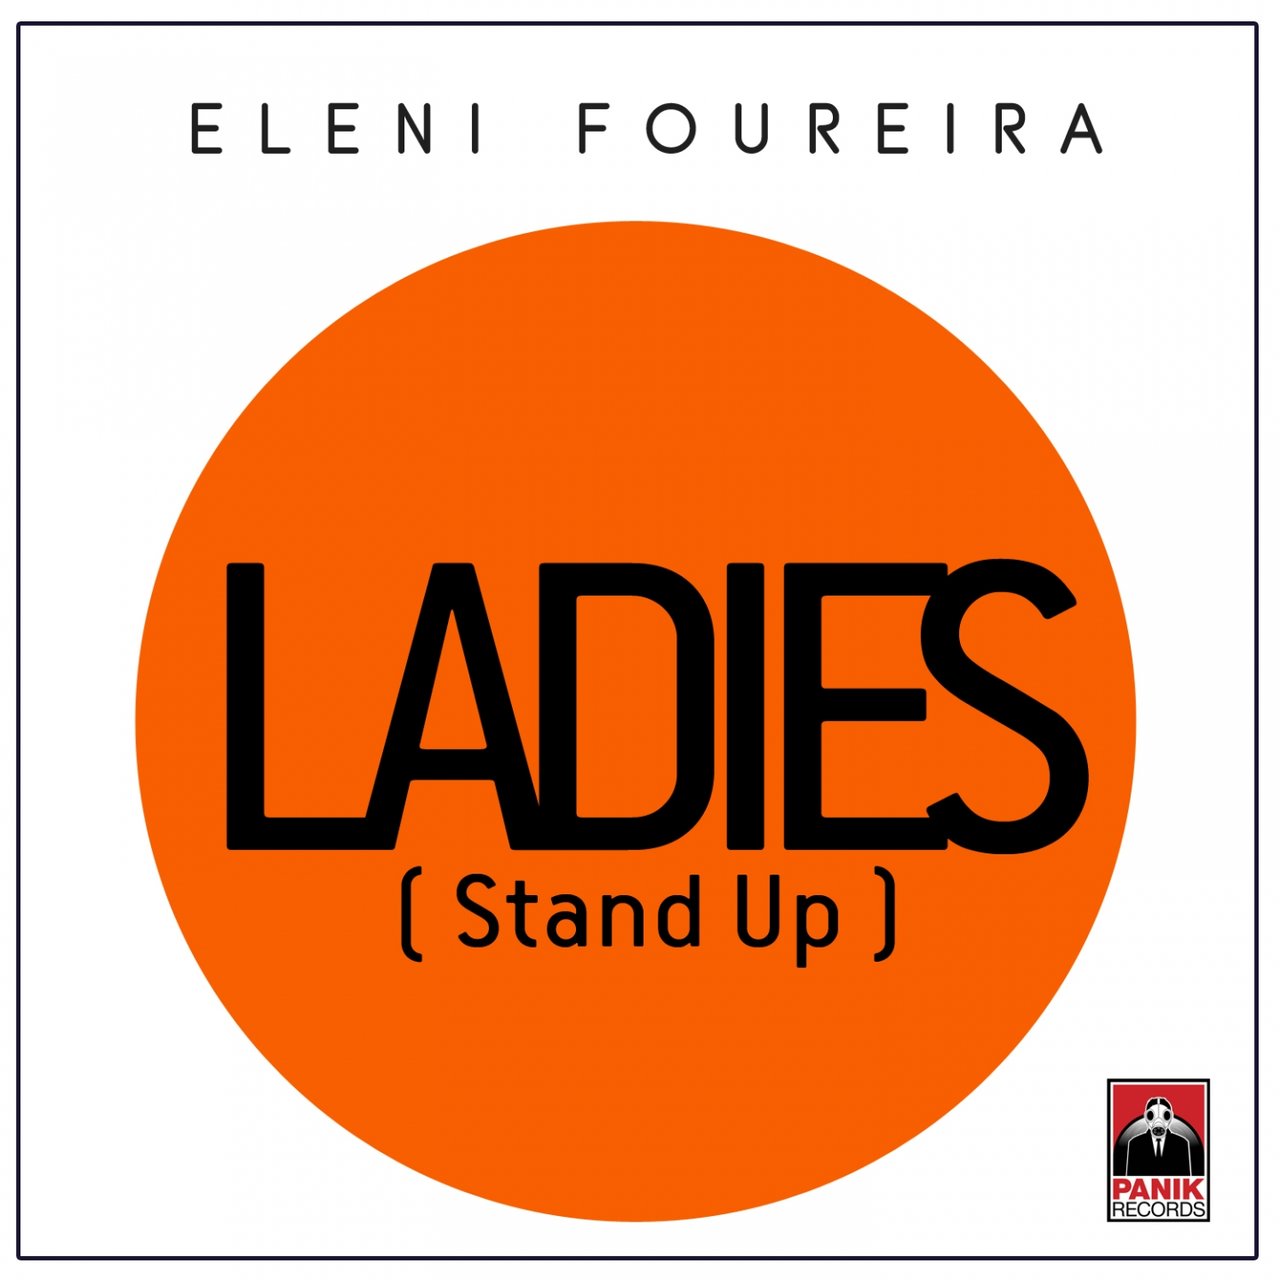 Eleni Foureira — Ladies (Stand Up) cover artwork